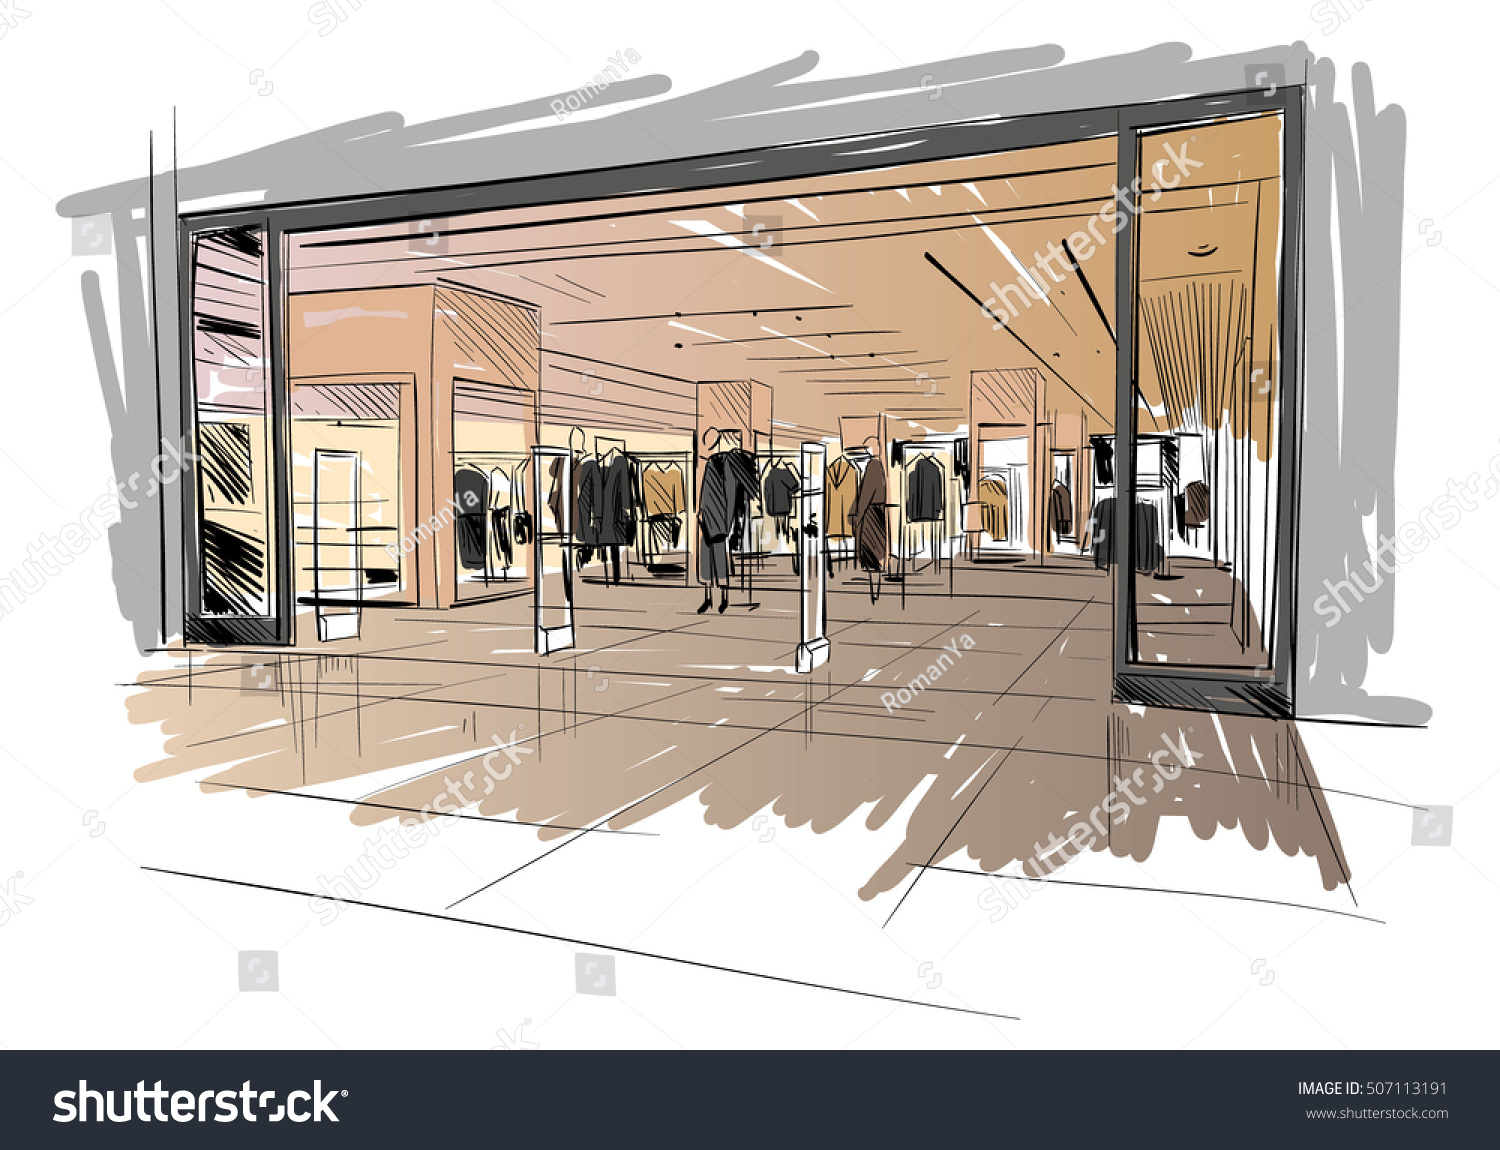 Stock Vector Fashion Store Hand Drawn Sketch Interior Design Vector Illustration 507113191 